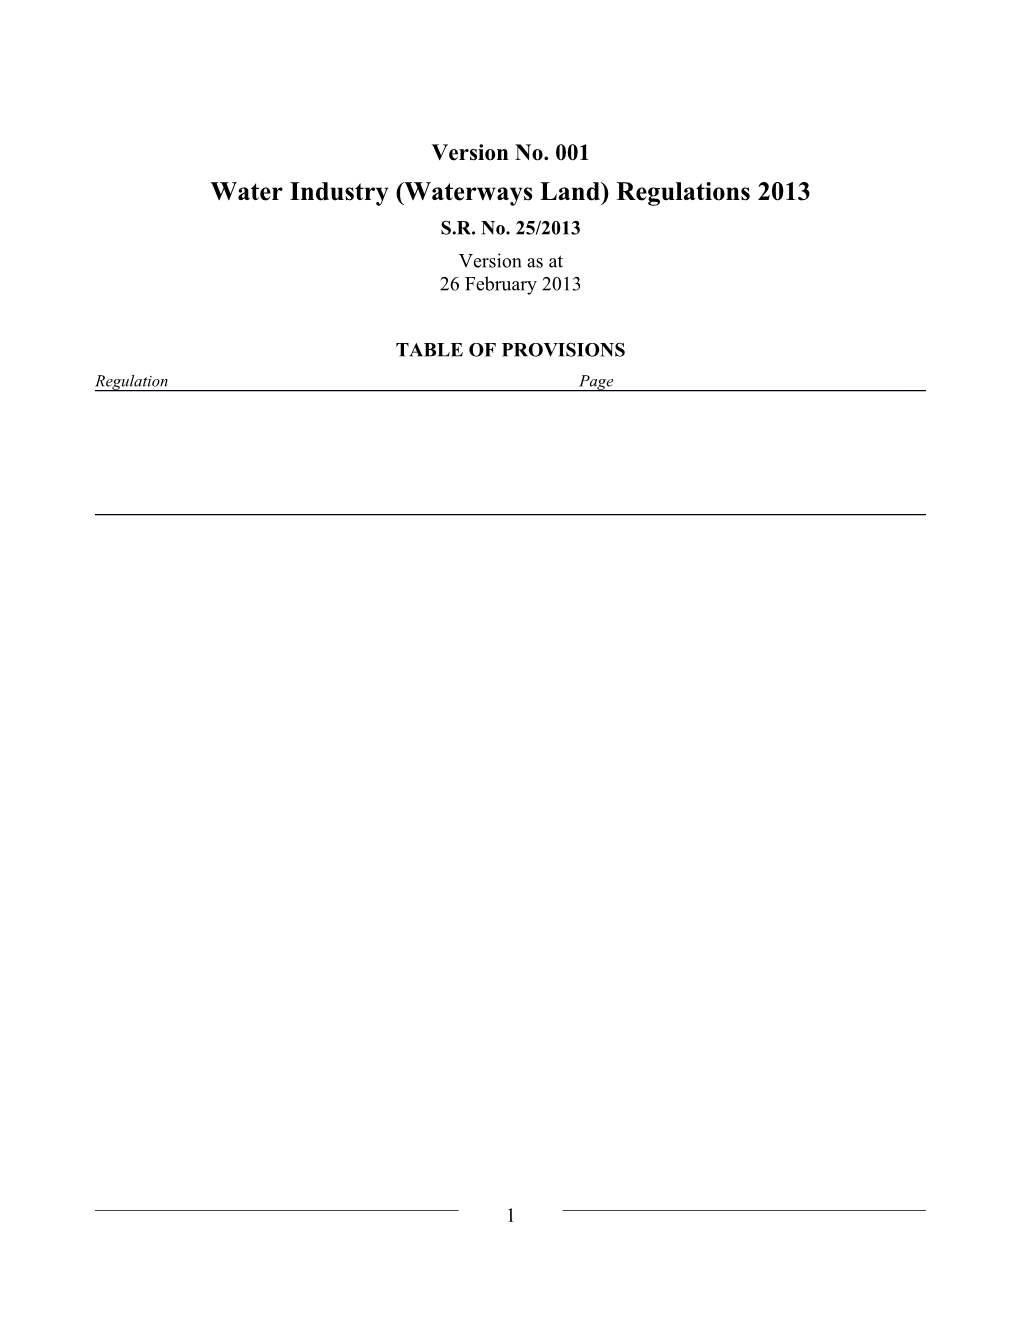 Water Industry (Waterways Land) Regulations 2013